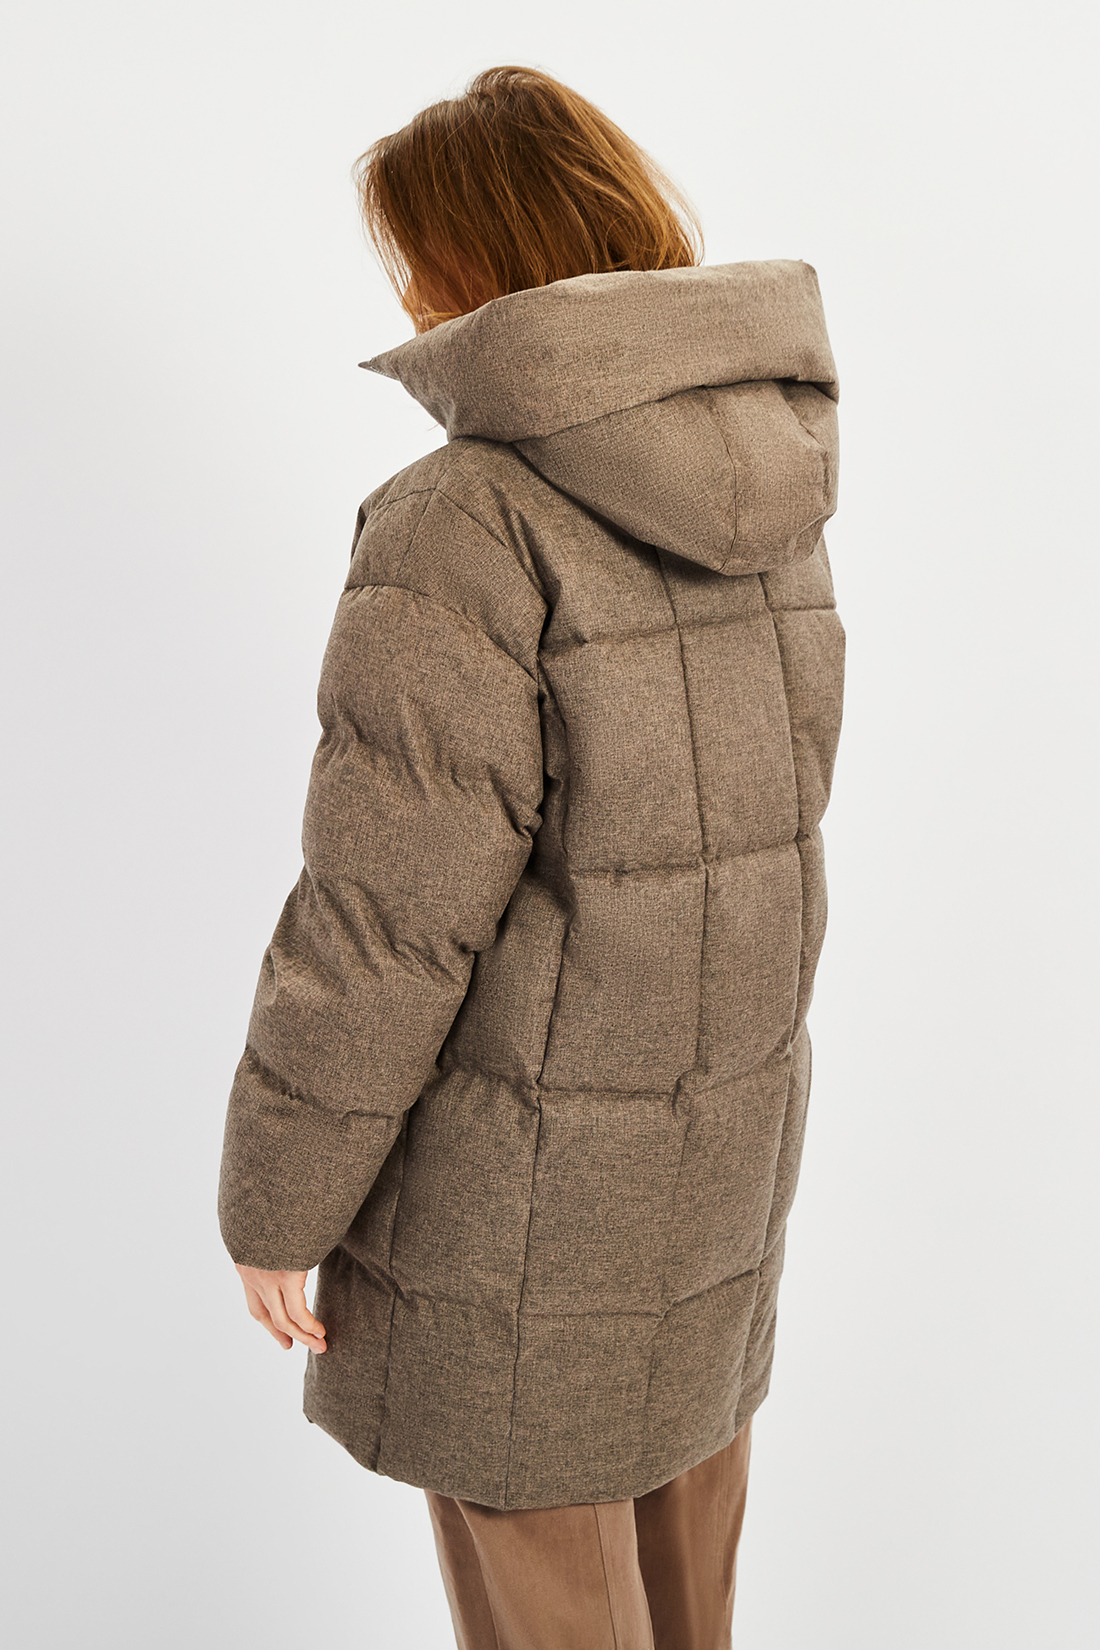 Куртка (Эко пух) (арт. baon B0422506), размер M, цвет коричневый Куртка (Эко пух) (арт. baon B0422506) - фото 2